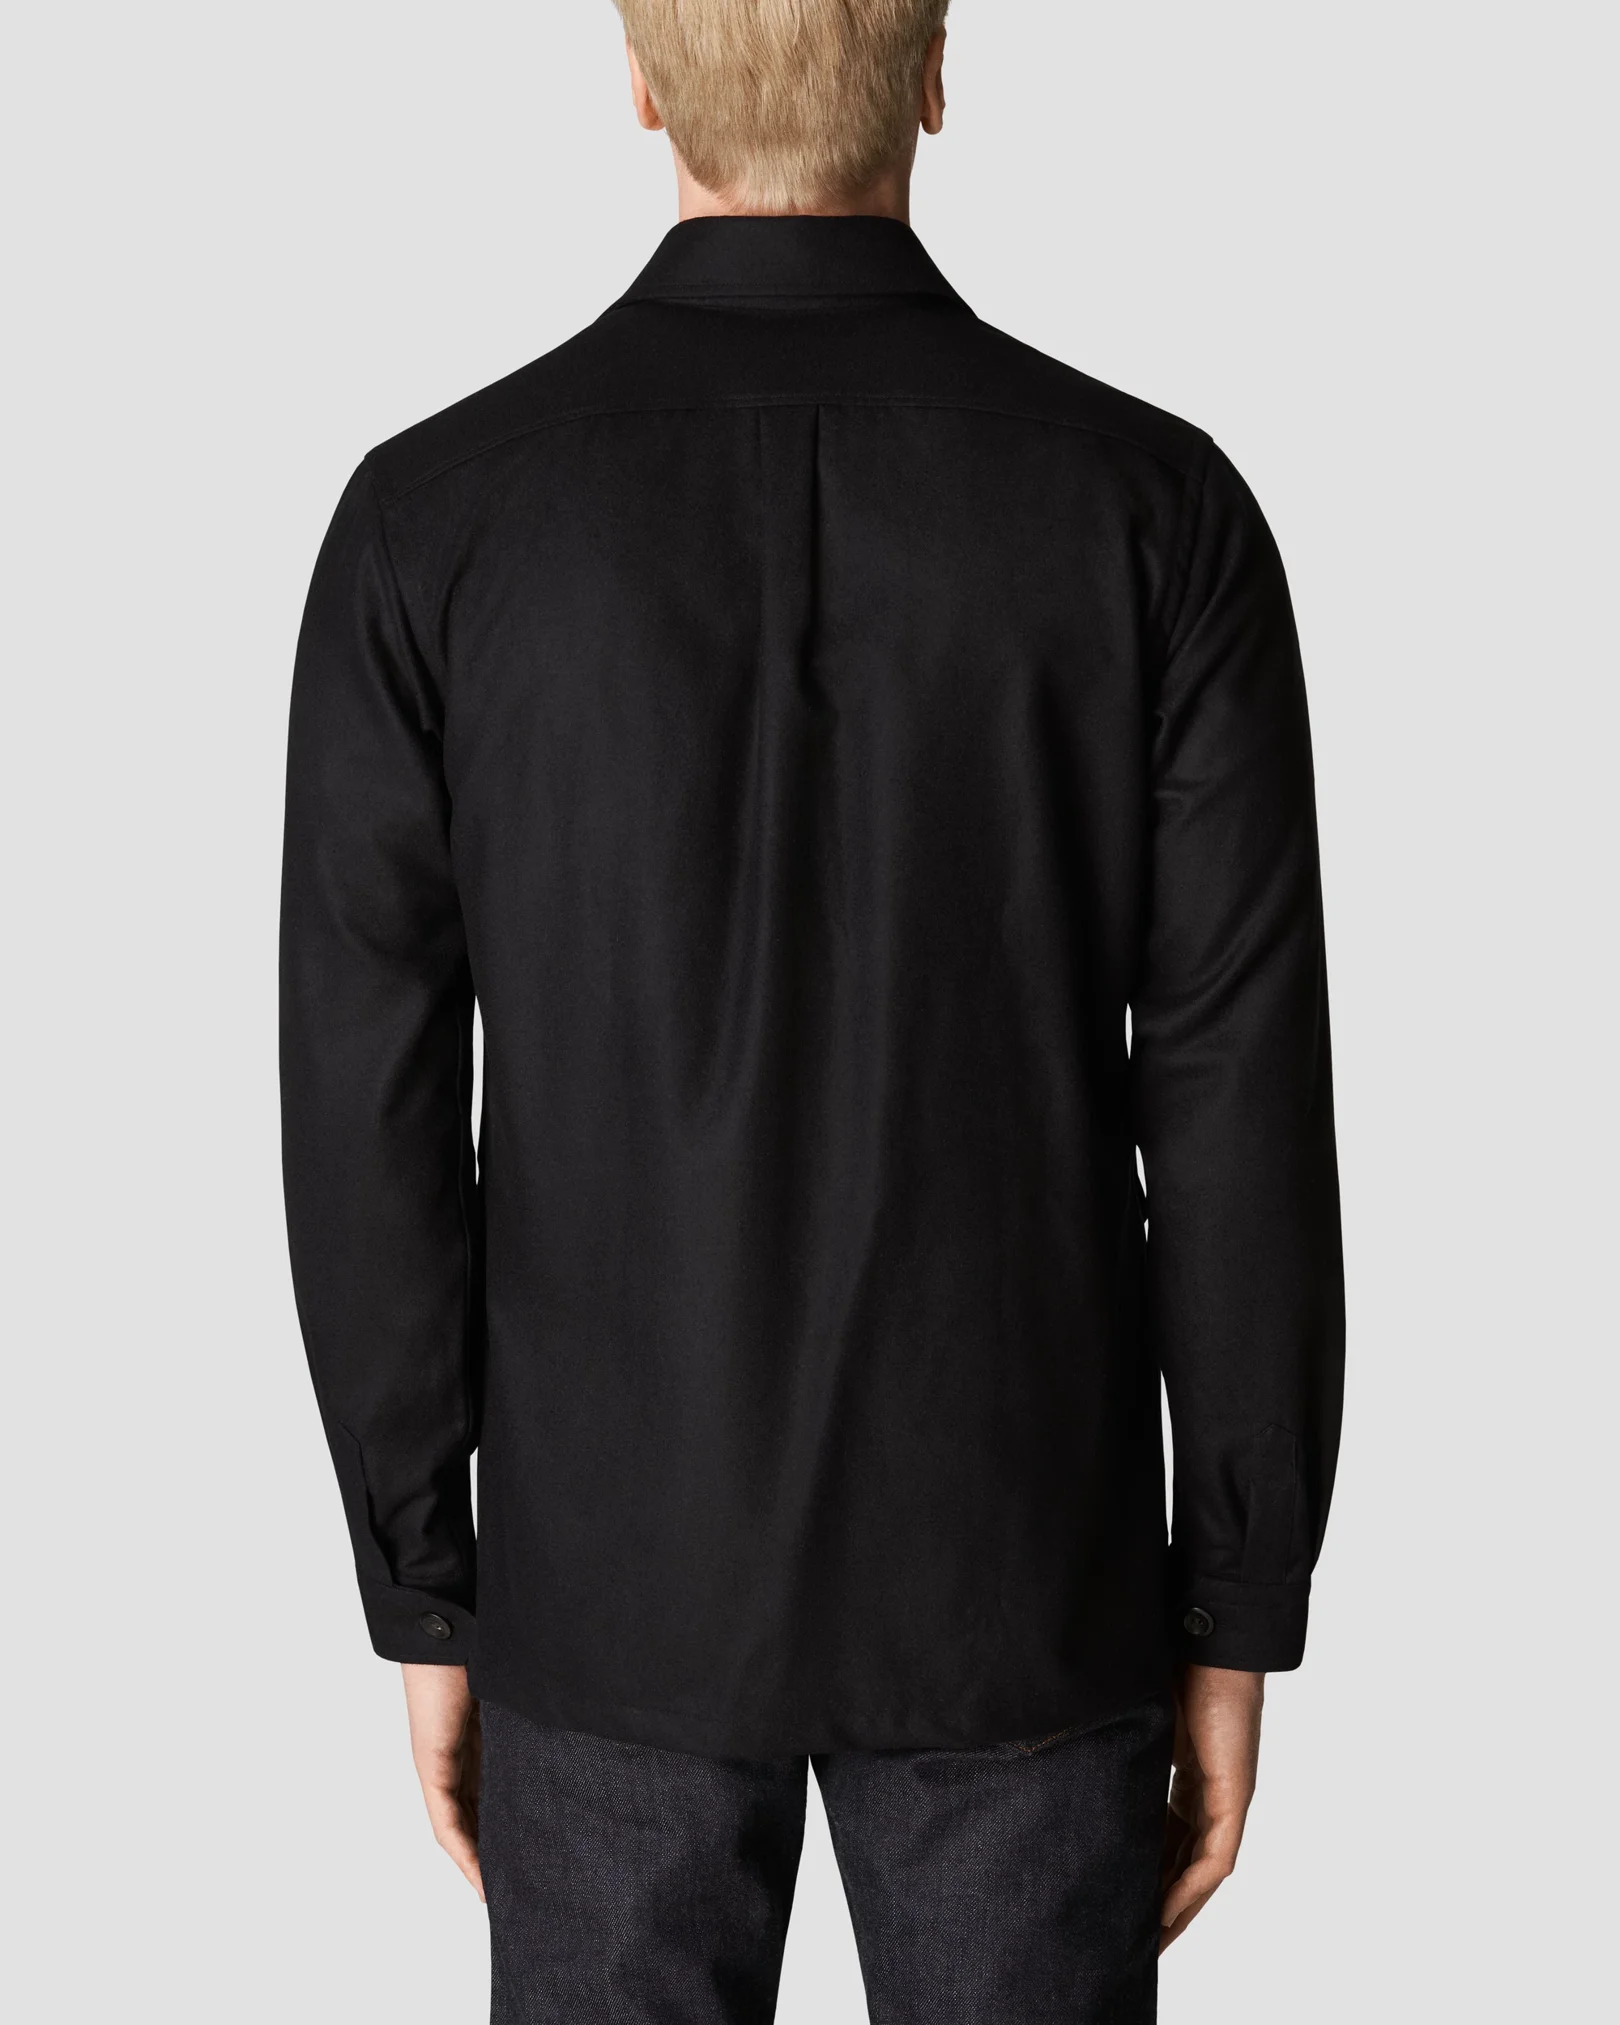 Eton - black twill wool cashmere